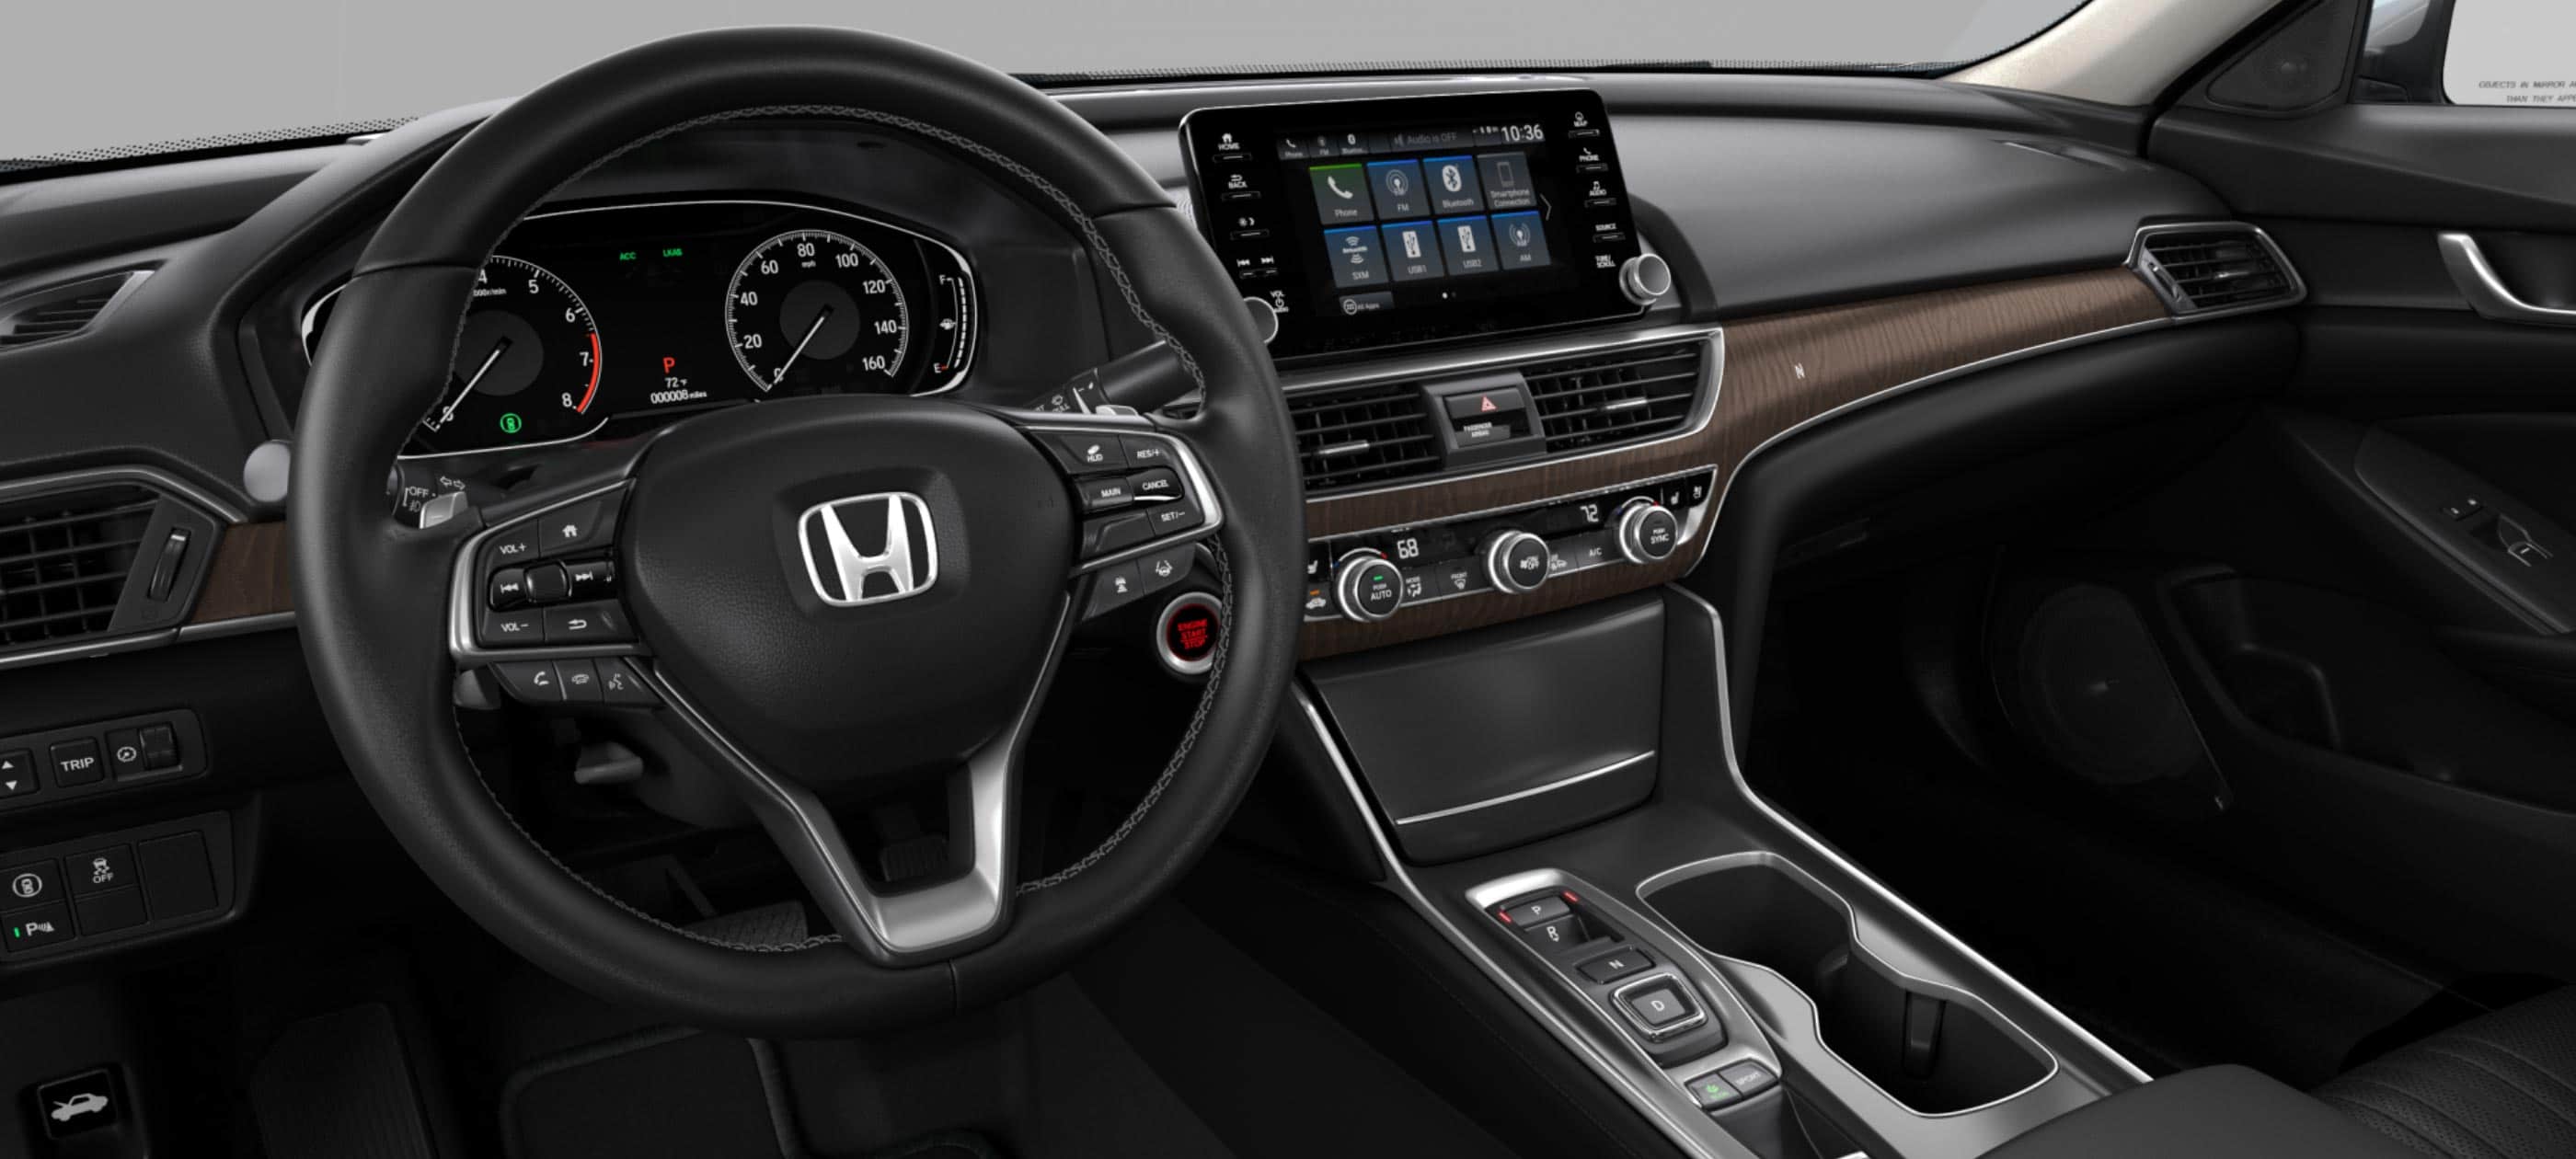 2018 Honda Accord Hybrid | Southern California Honda Dealers | Pricing,  Features, Photos